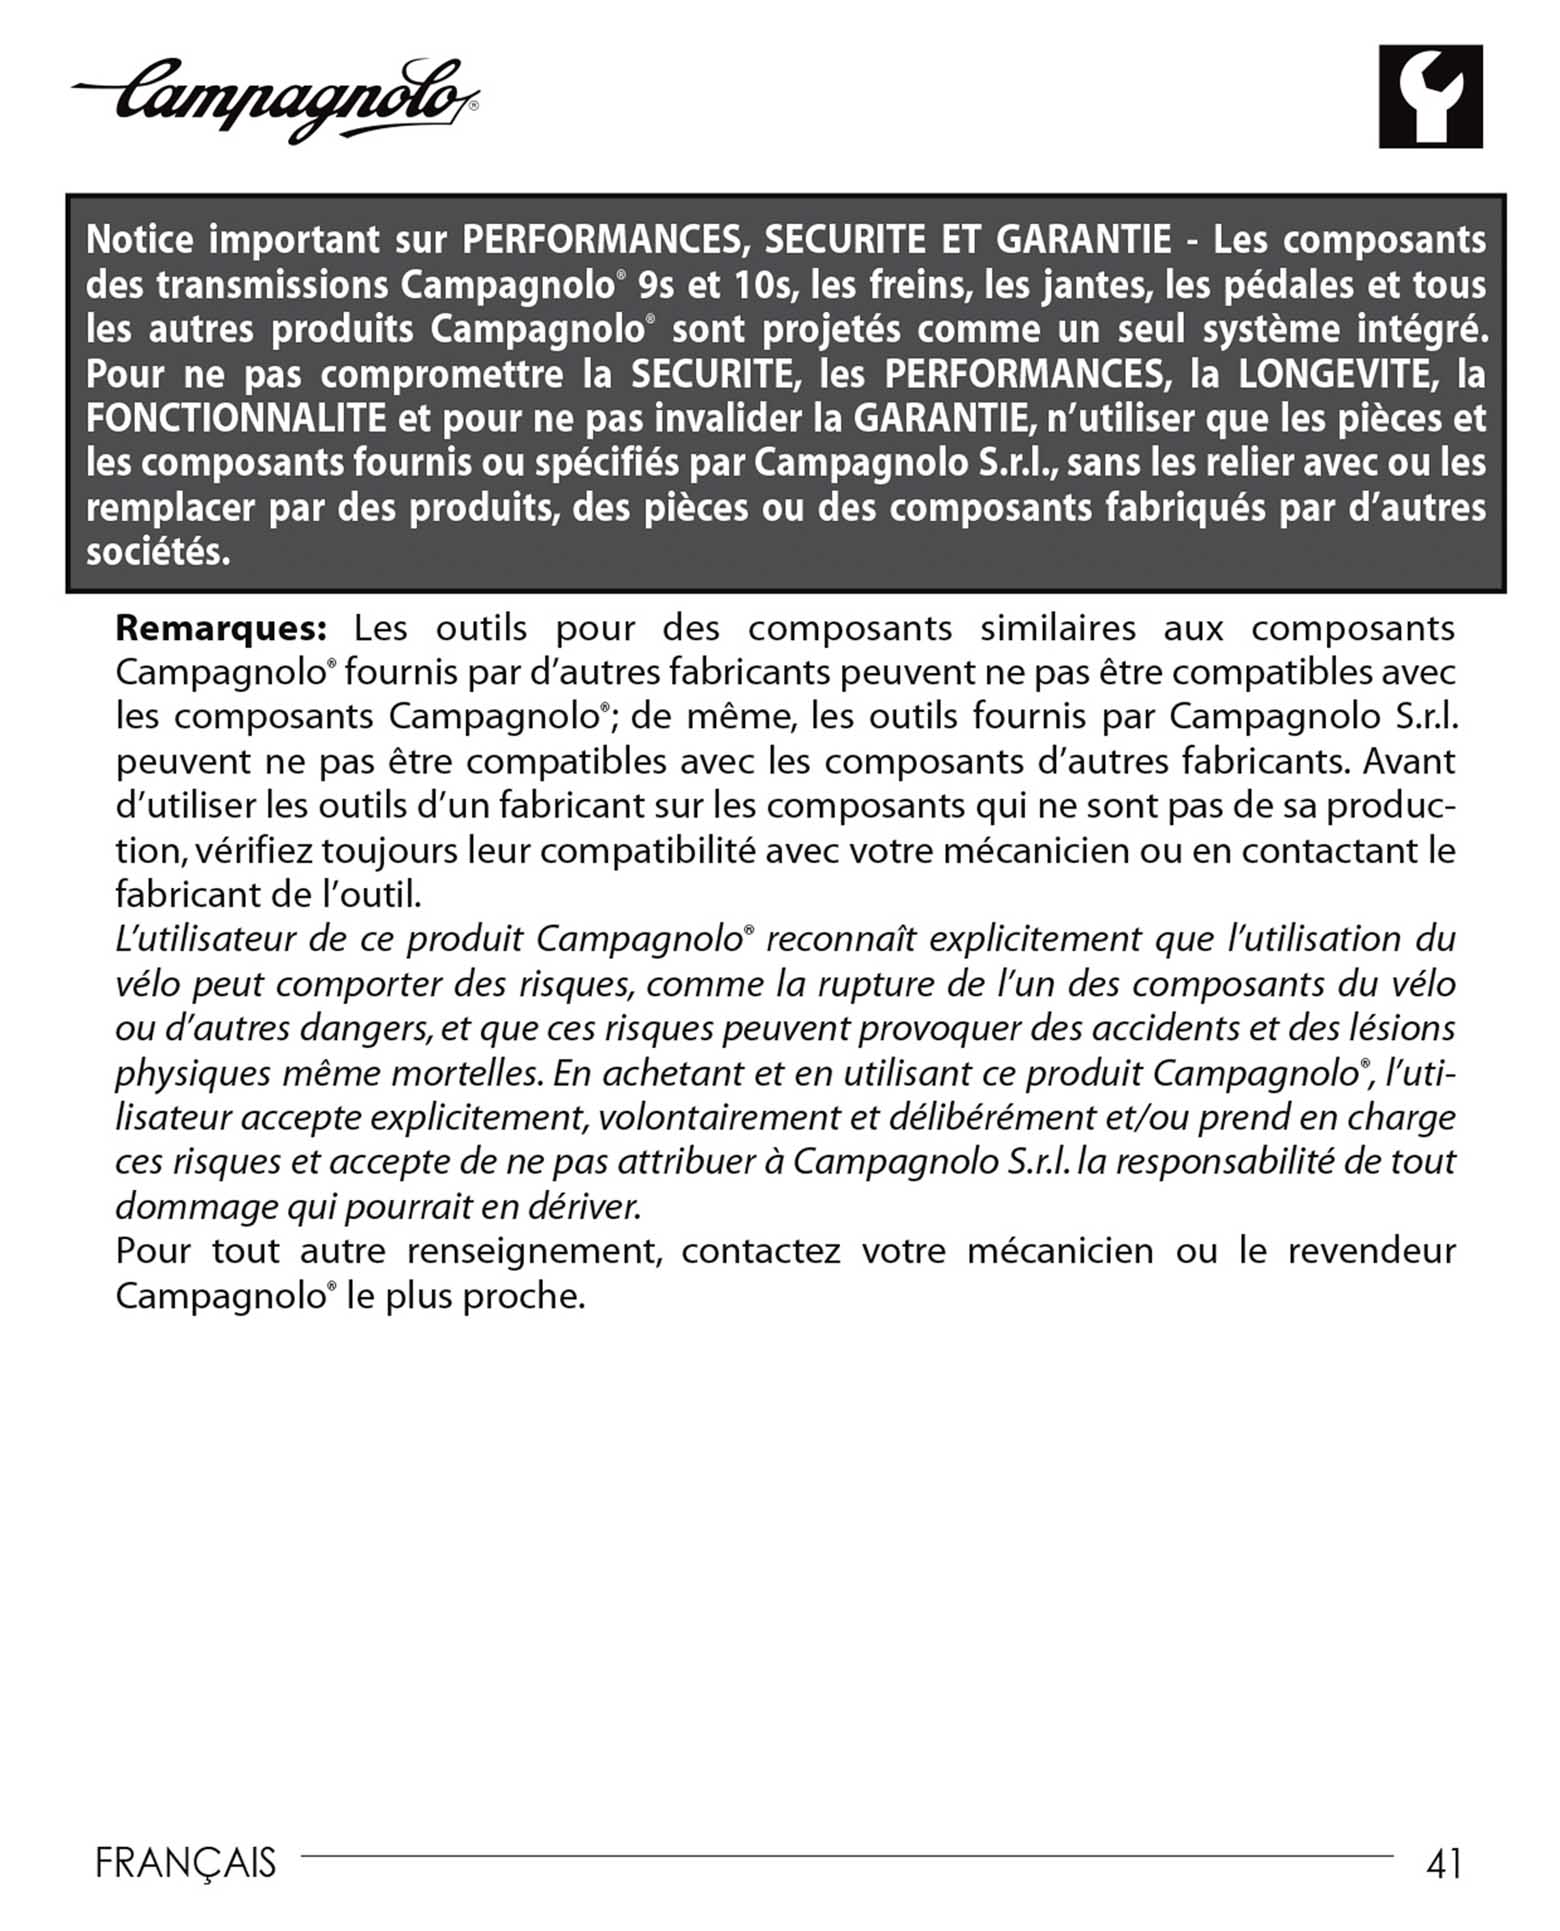 Campagnolo instructions - 7225475 Rear Derailleur ('12/2009') page 041 main image